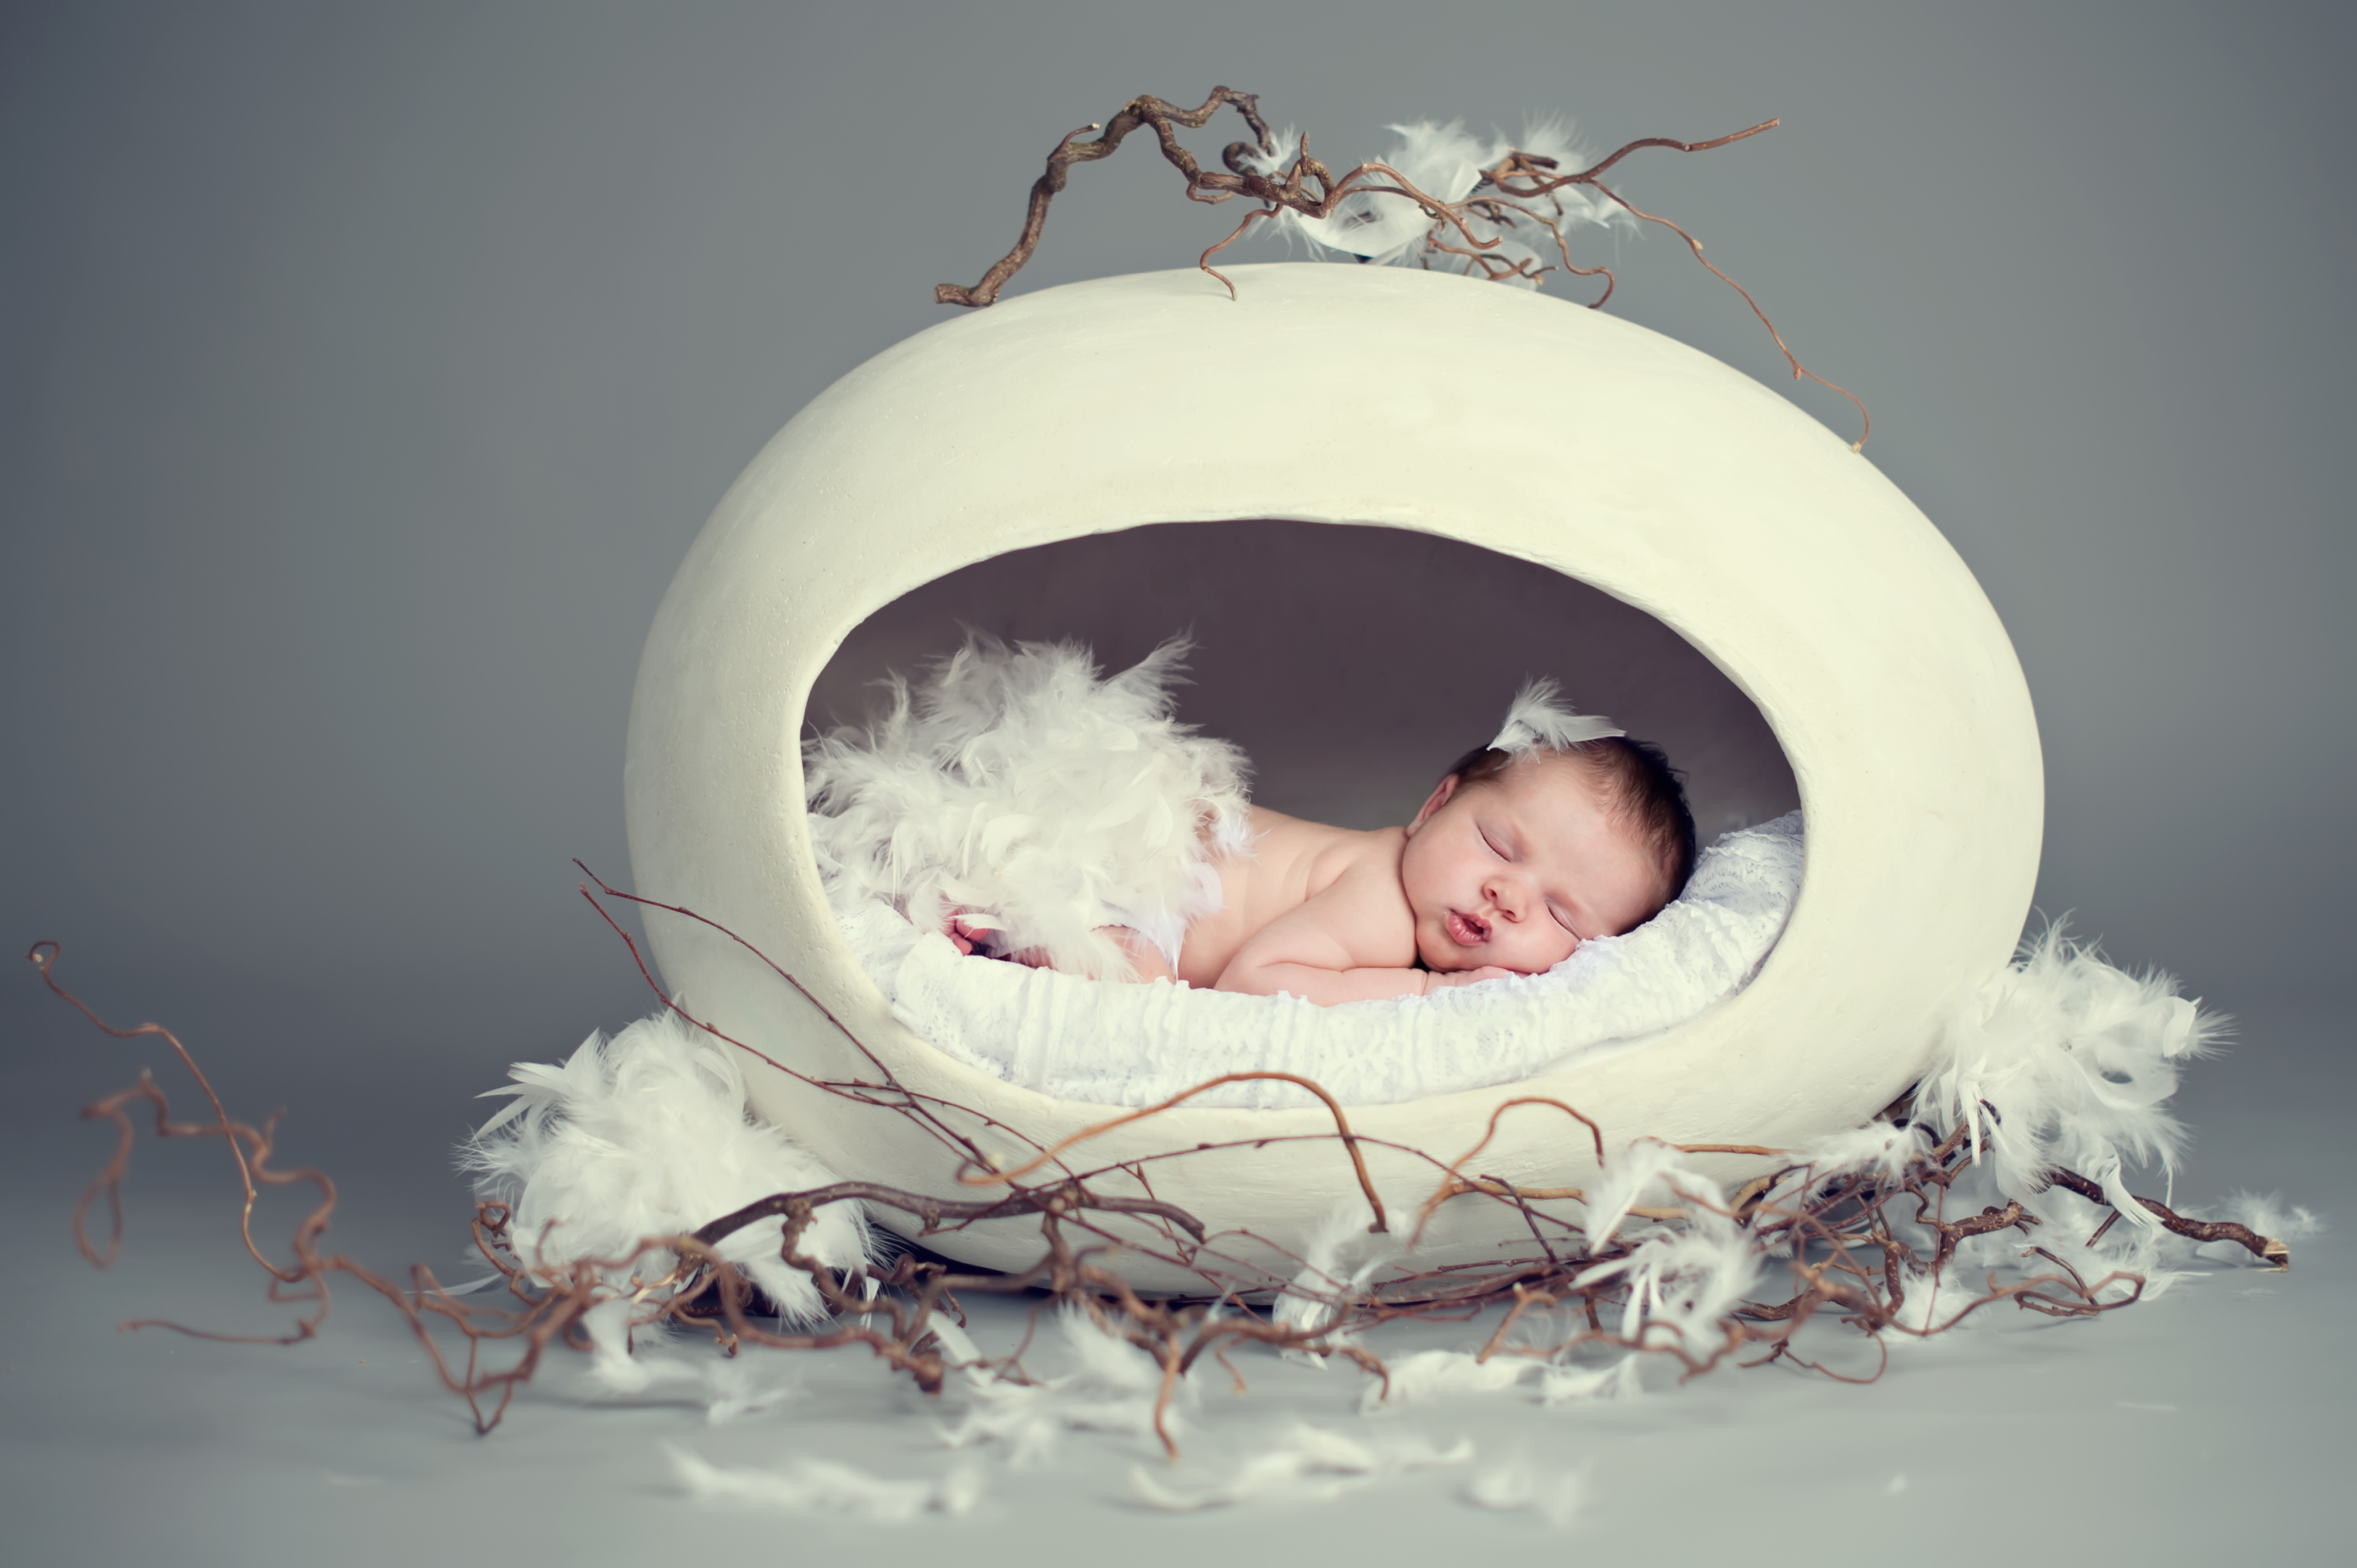 Leana Charleen (10 Tage jung) – Neugeborenenfotografie